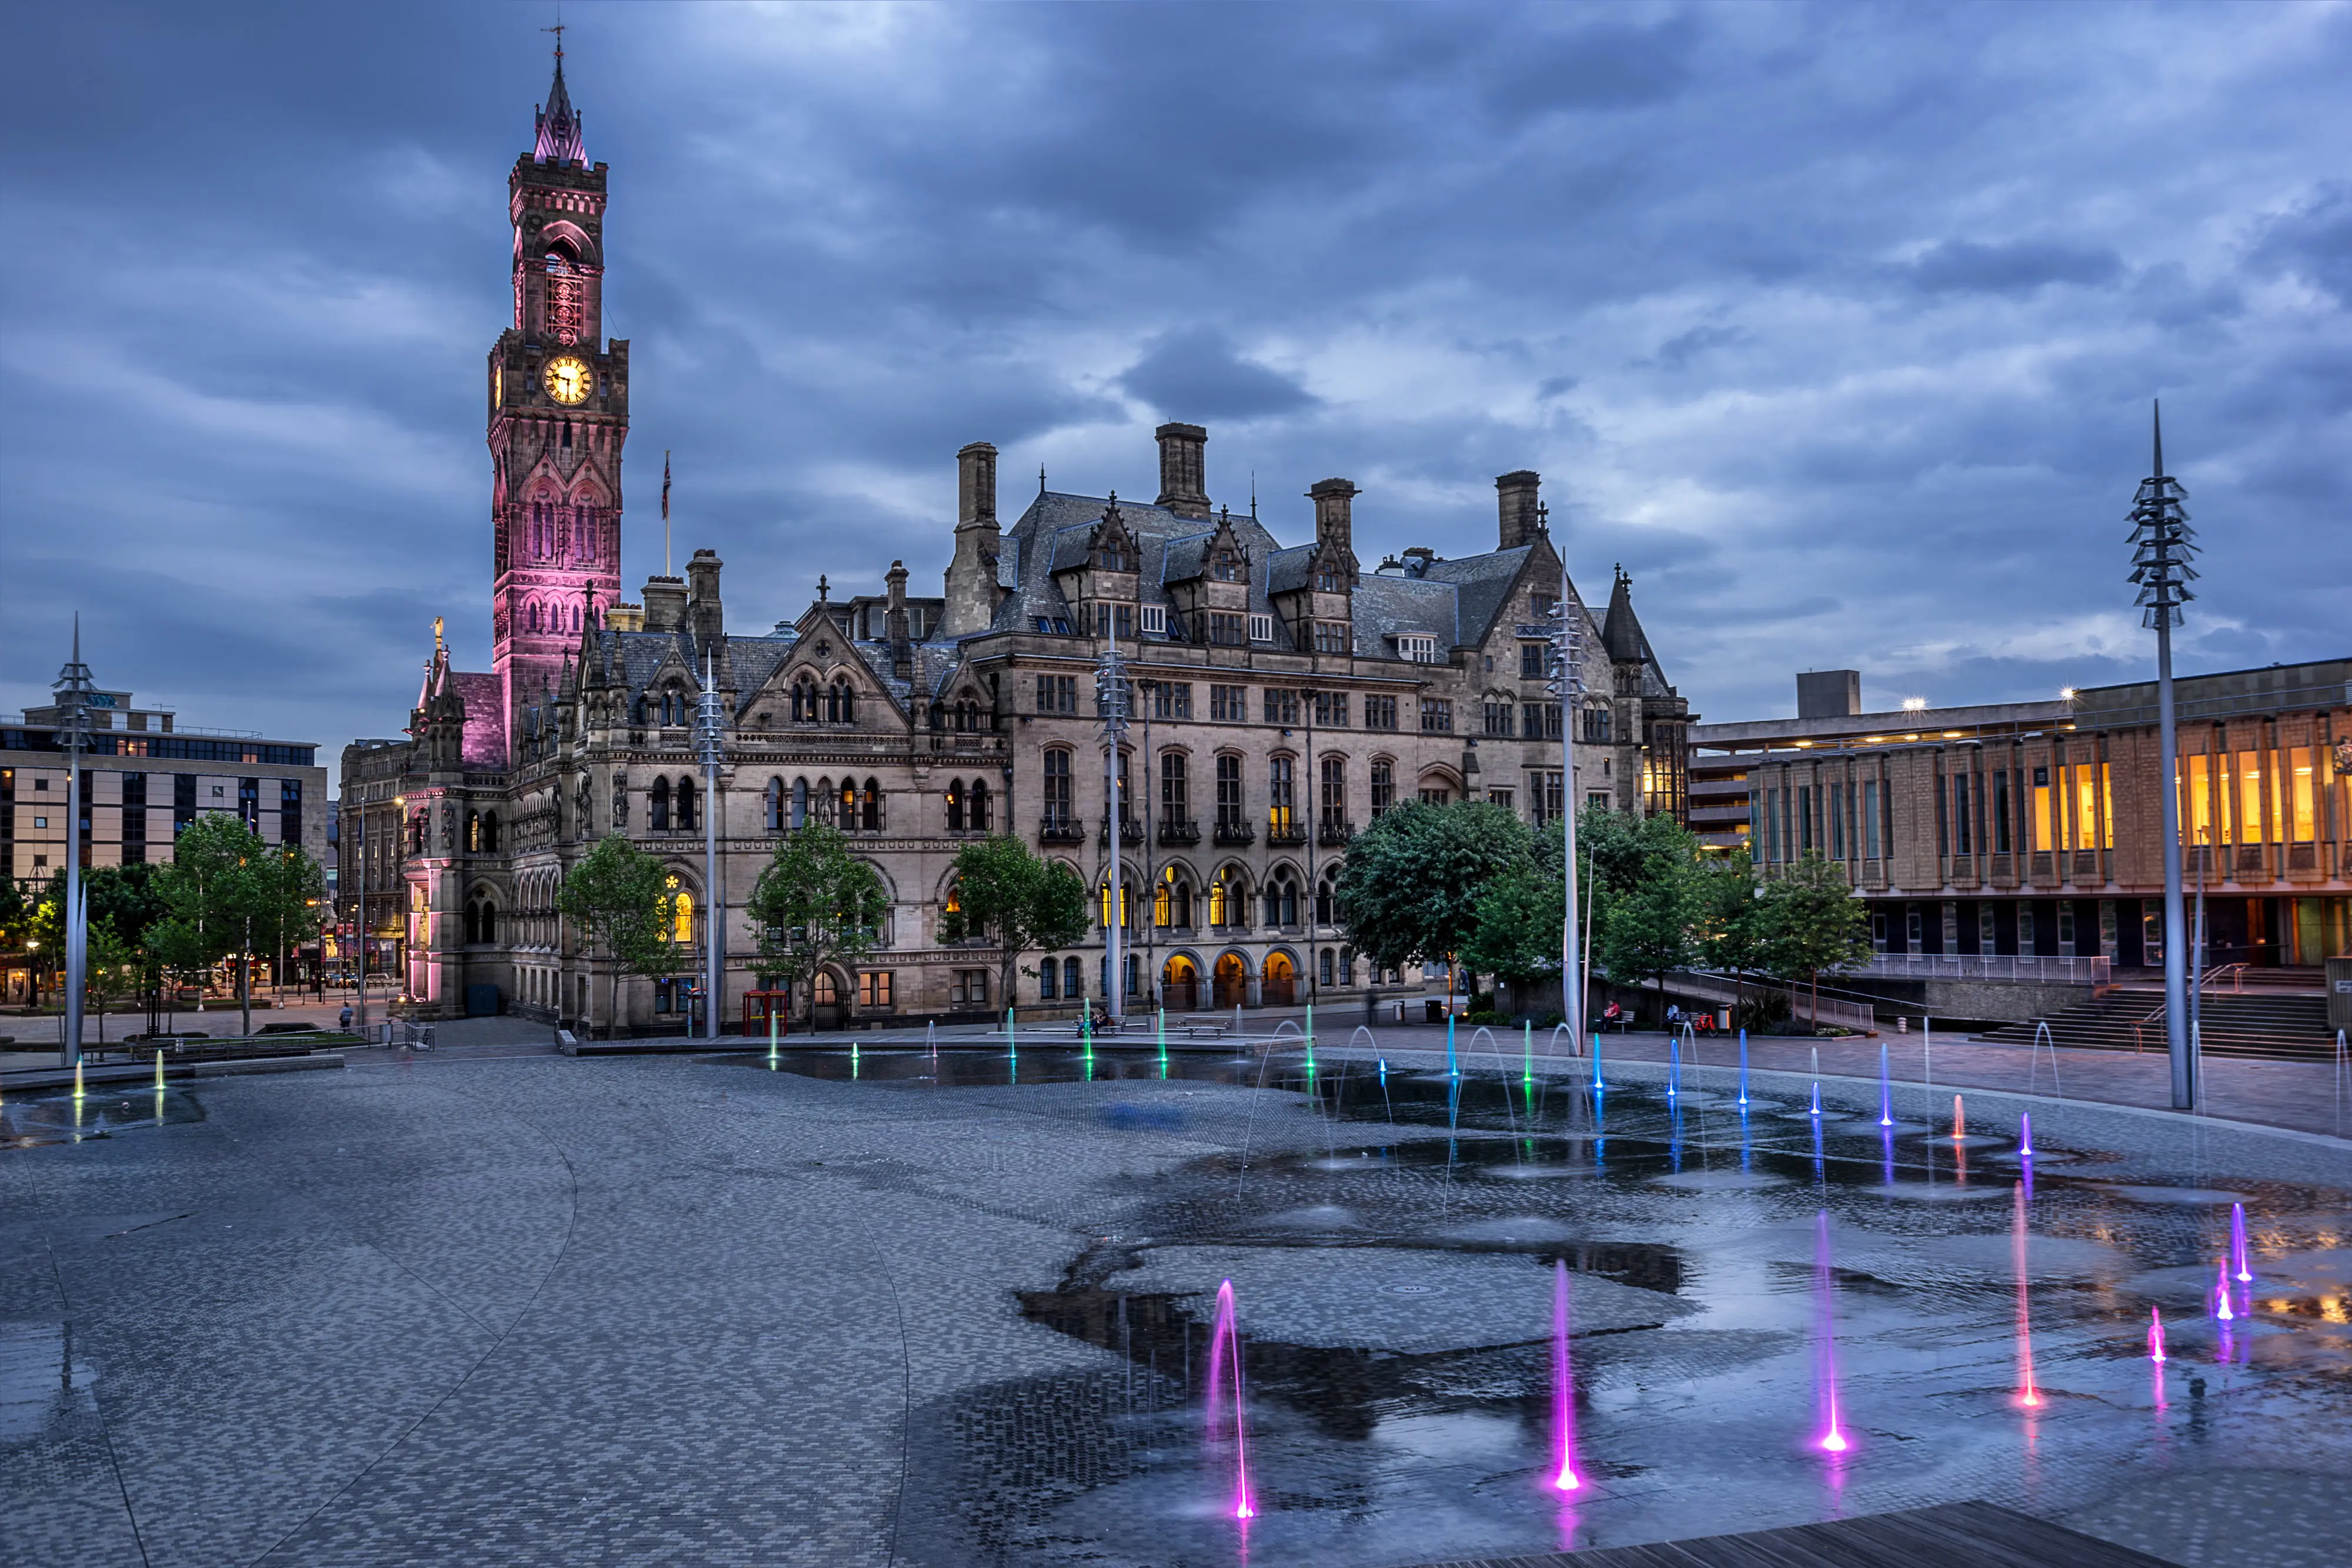 An image of Bradford